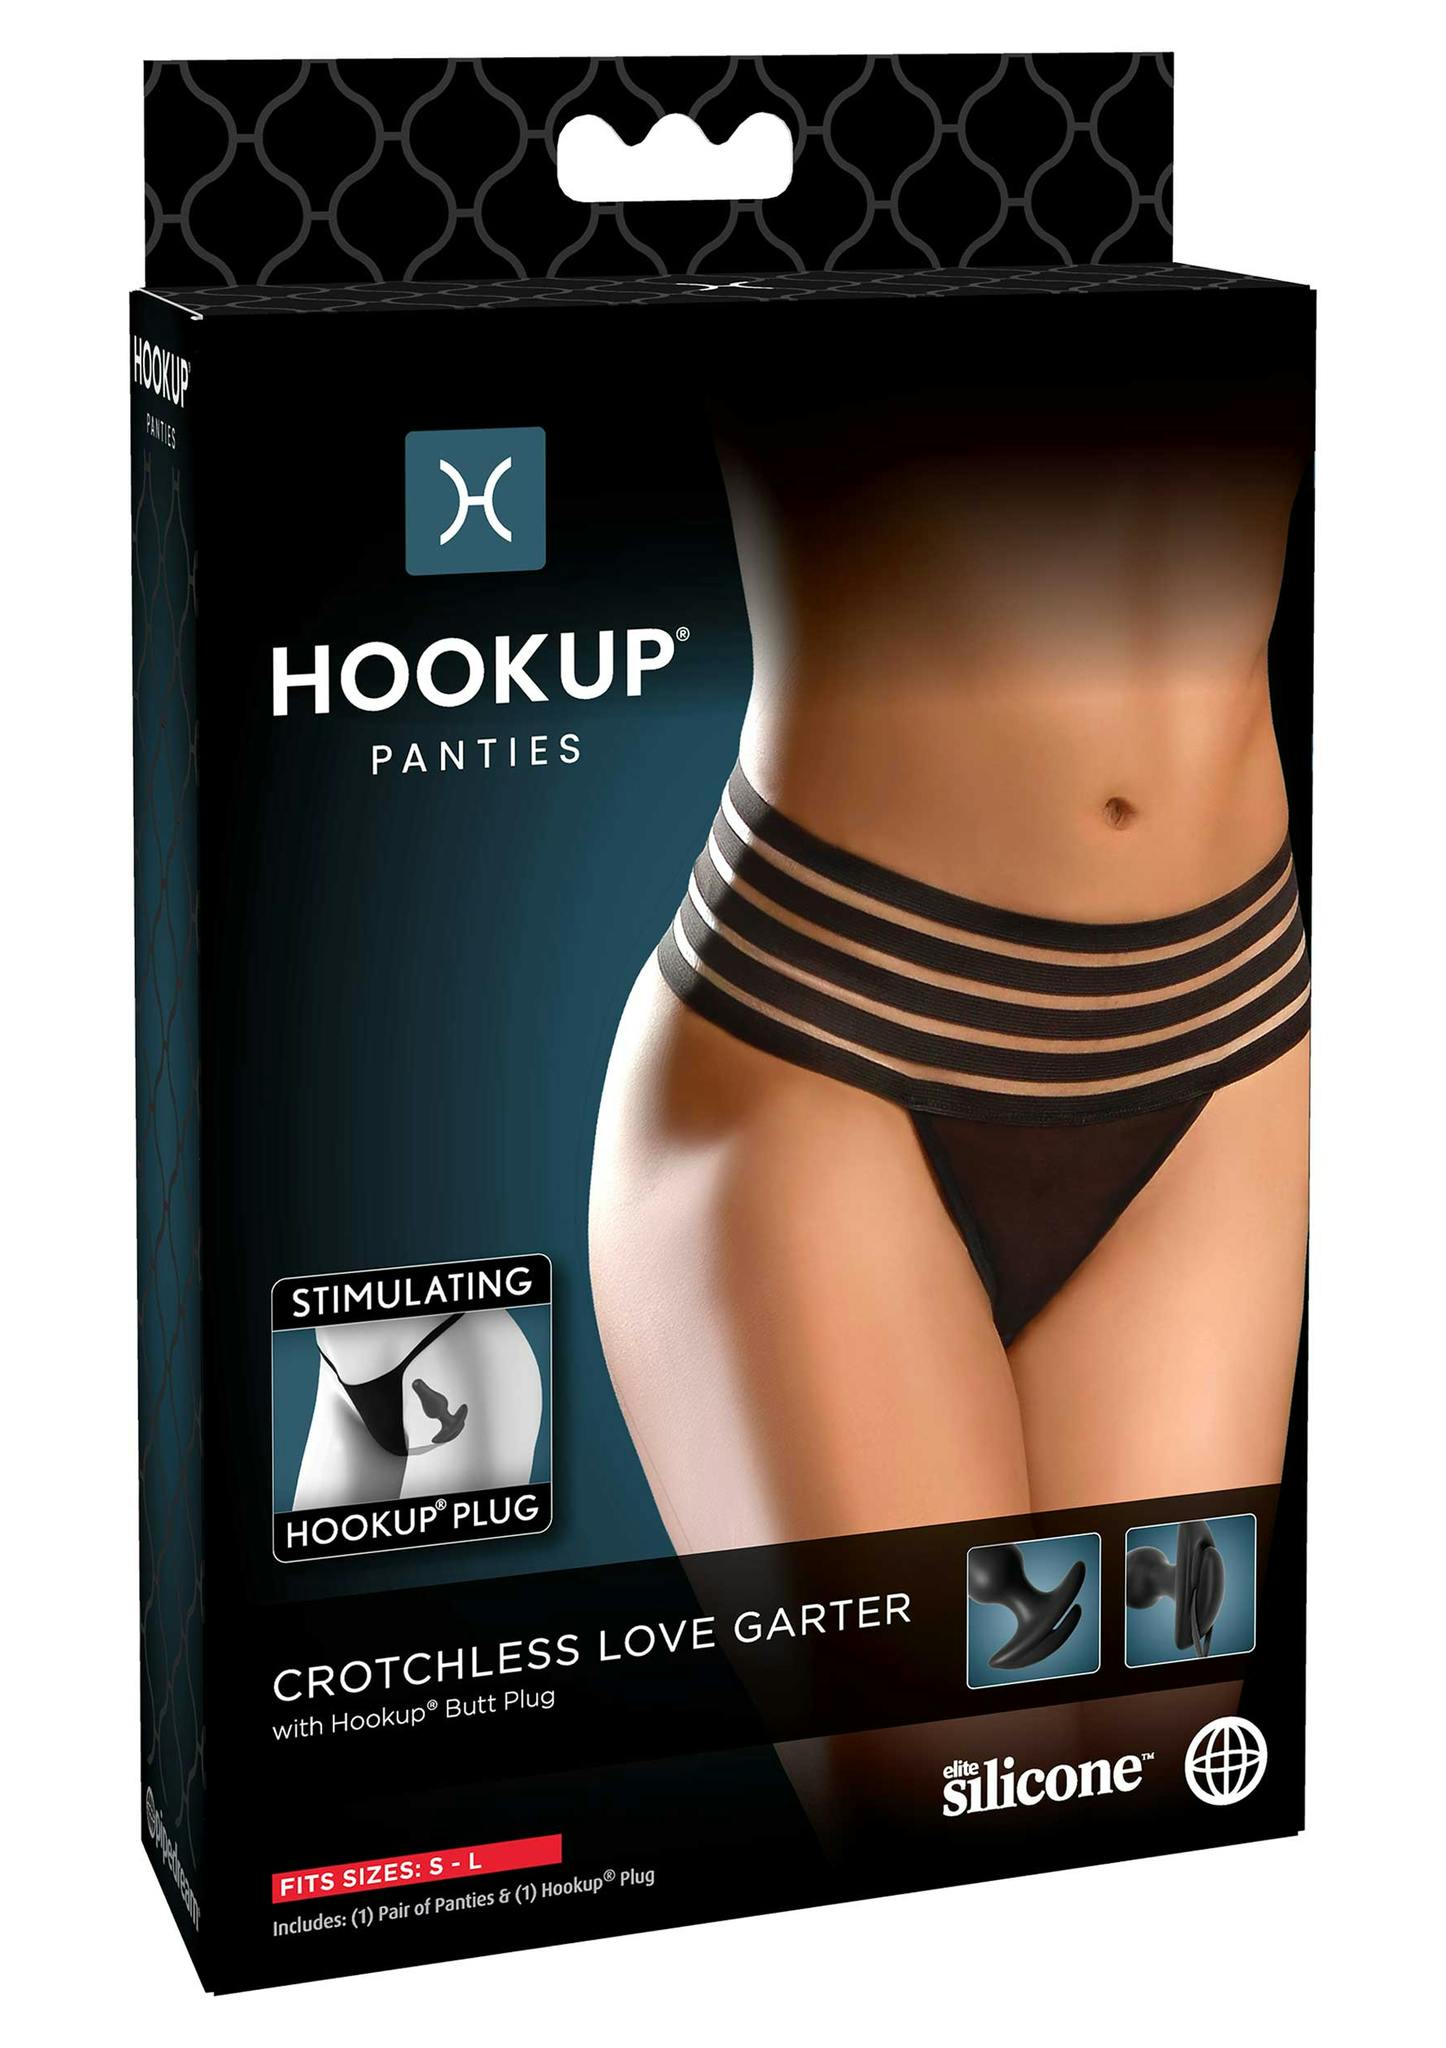 Hookup panties - Crotchless Love Garter, S-L